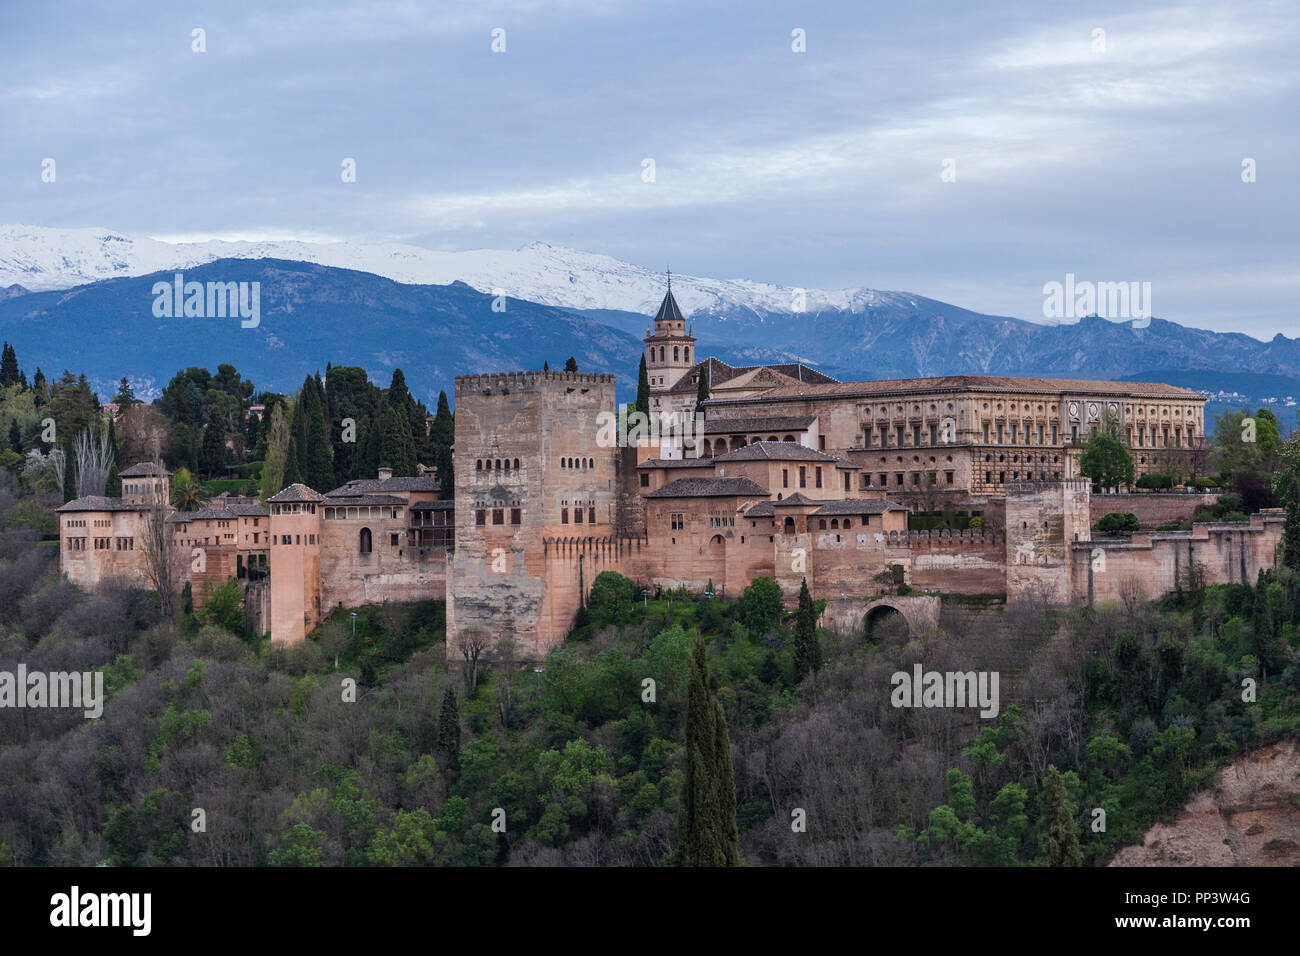 Die Alahambra Palace in Granada Spanien Stockfoto